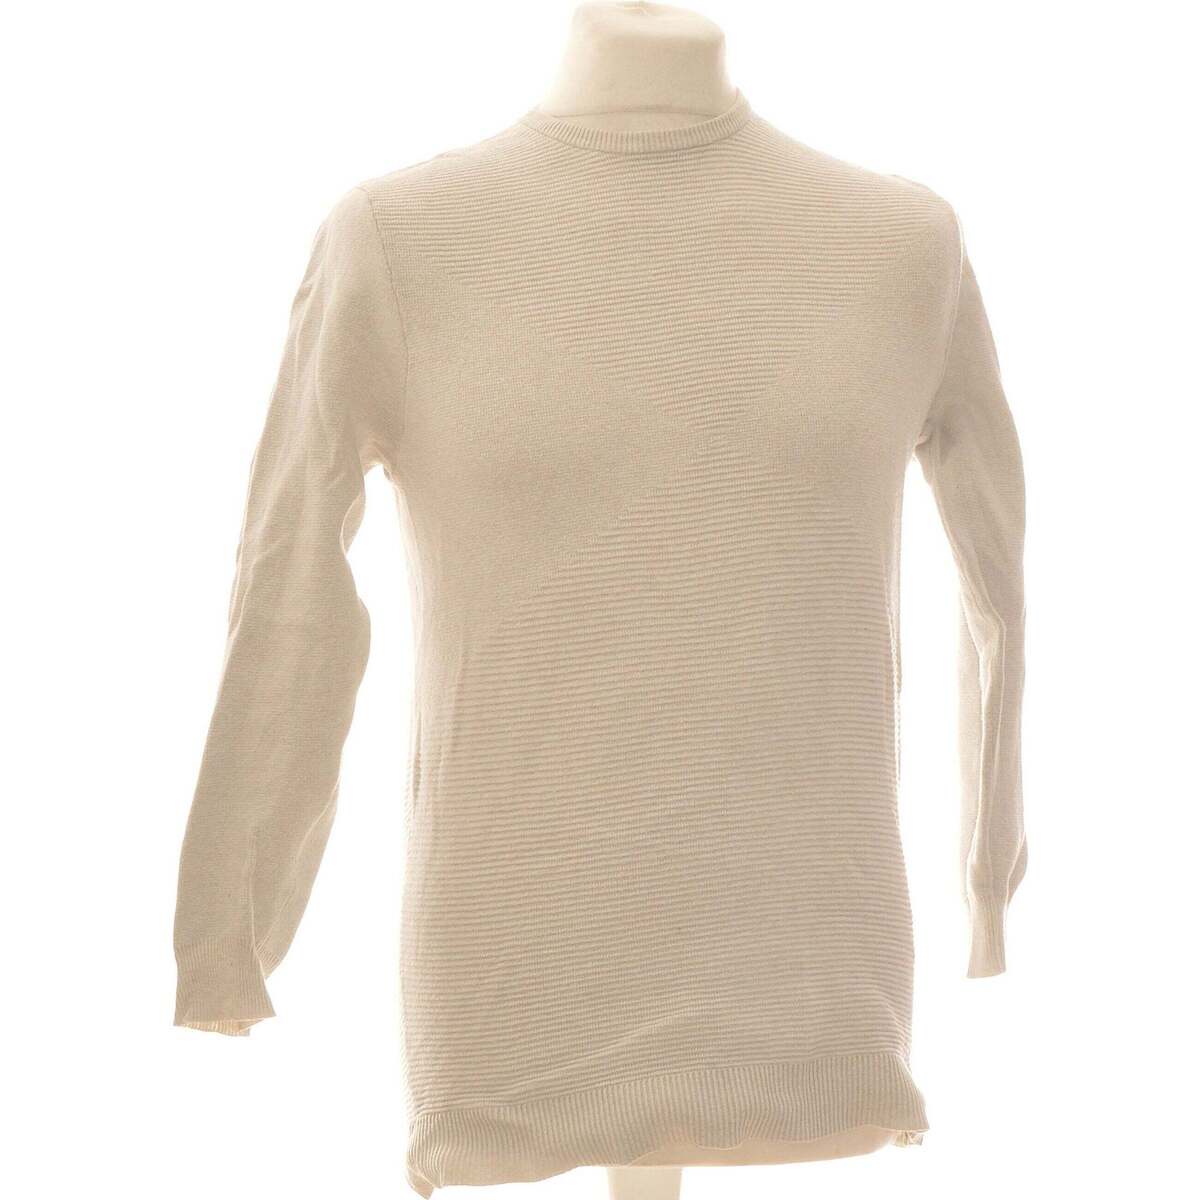 Vêtements Homme Pulls Zara pull homme  36 - T1 - S Blanc Blanc